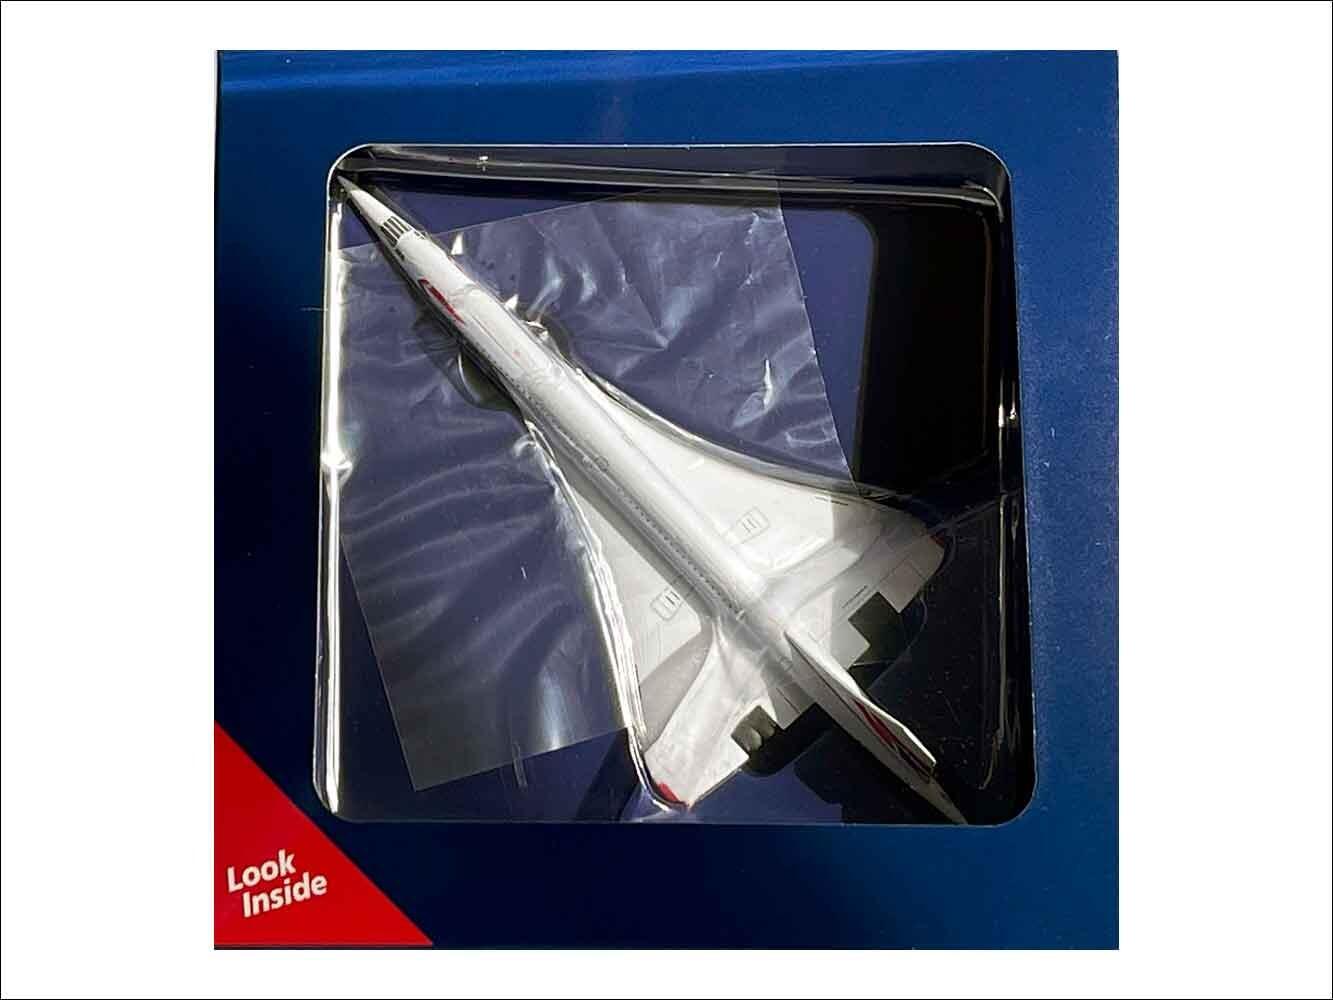 Concorde BA 'Manchester Airport' model